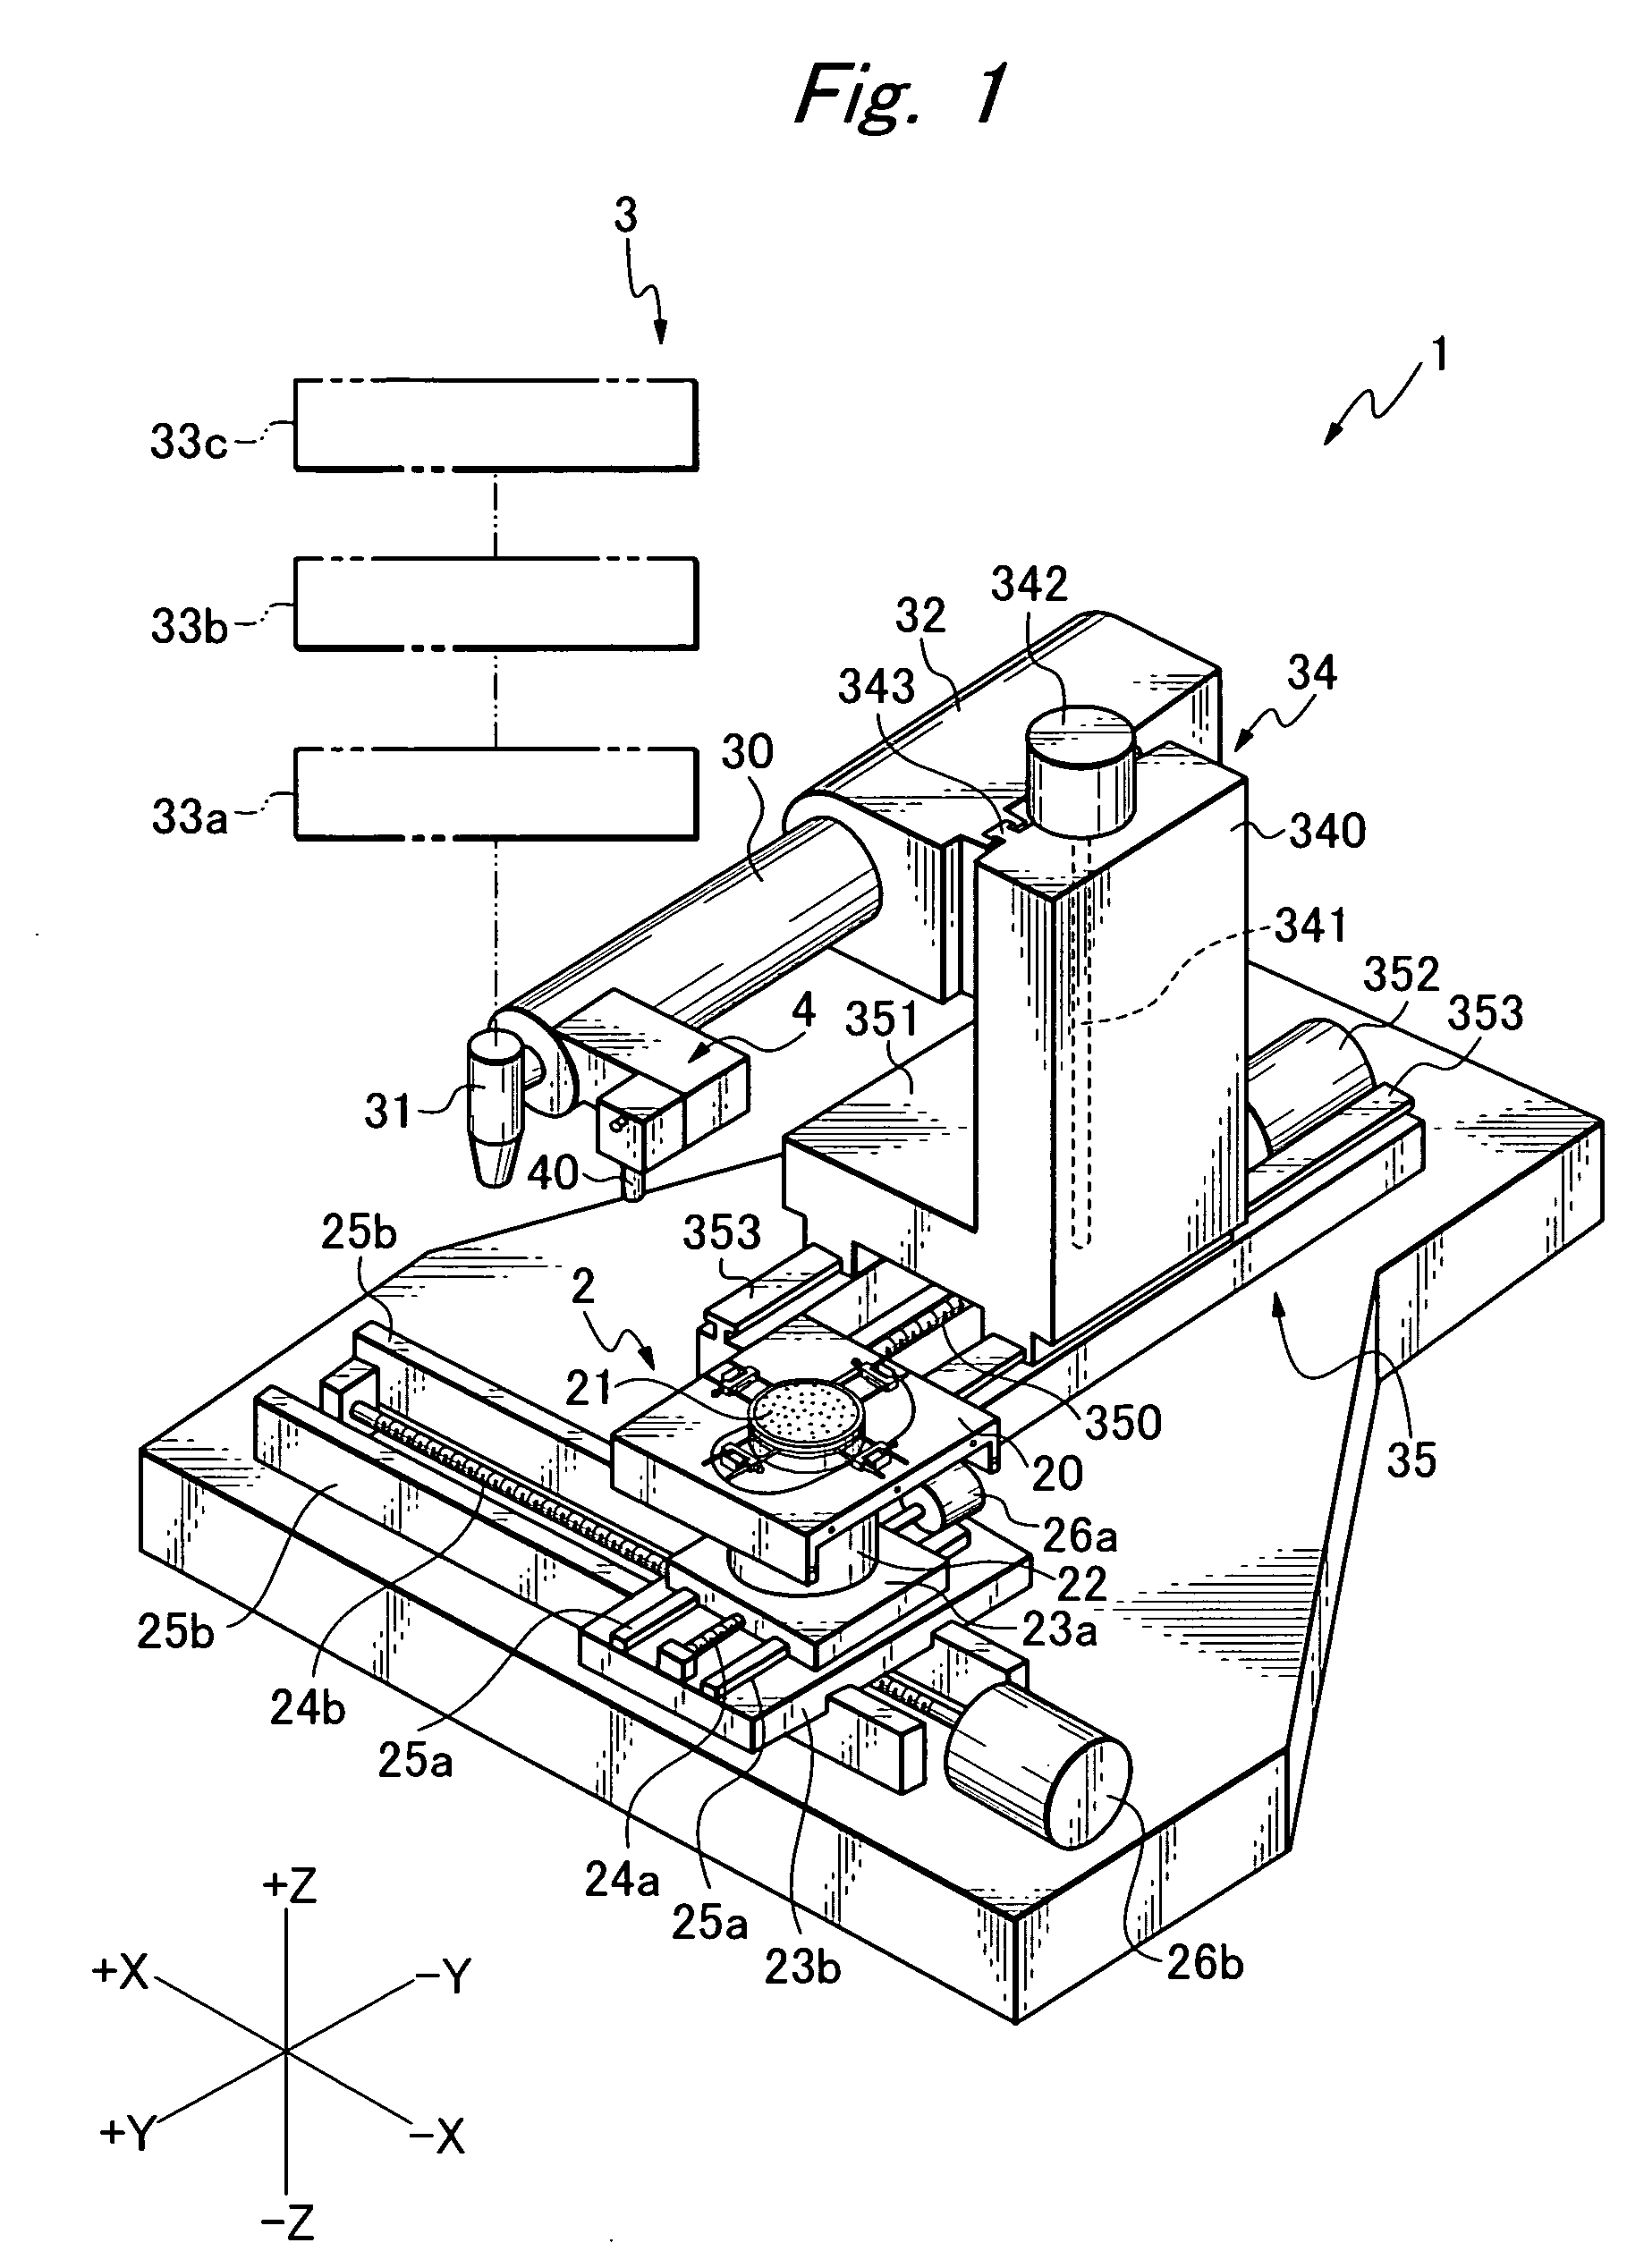 Wafer holding mechanism